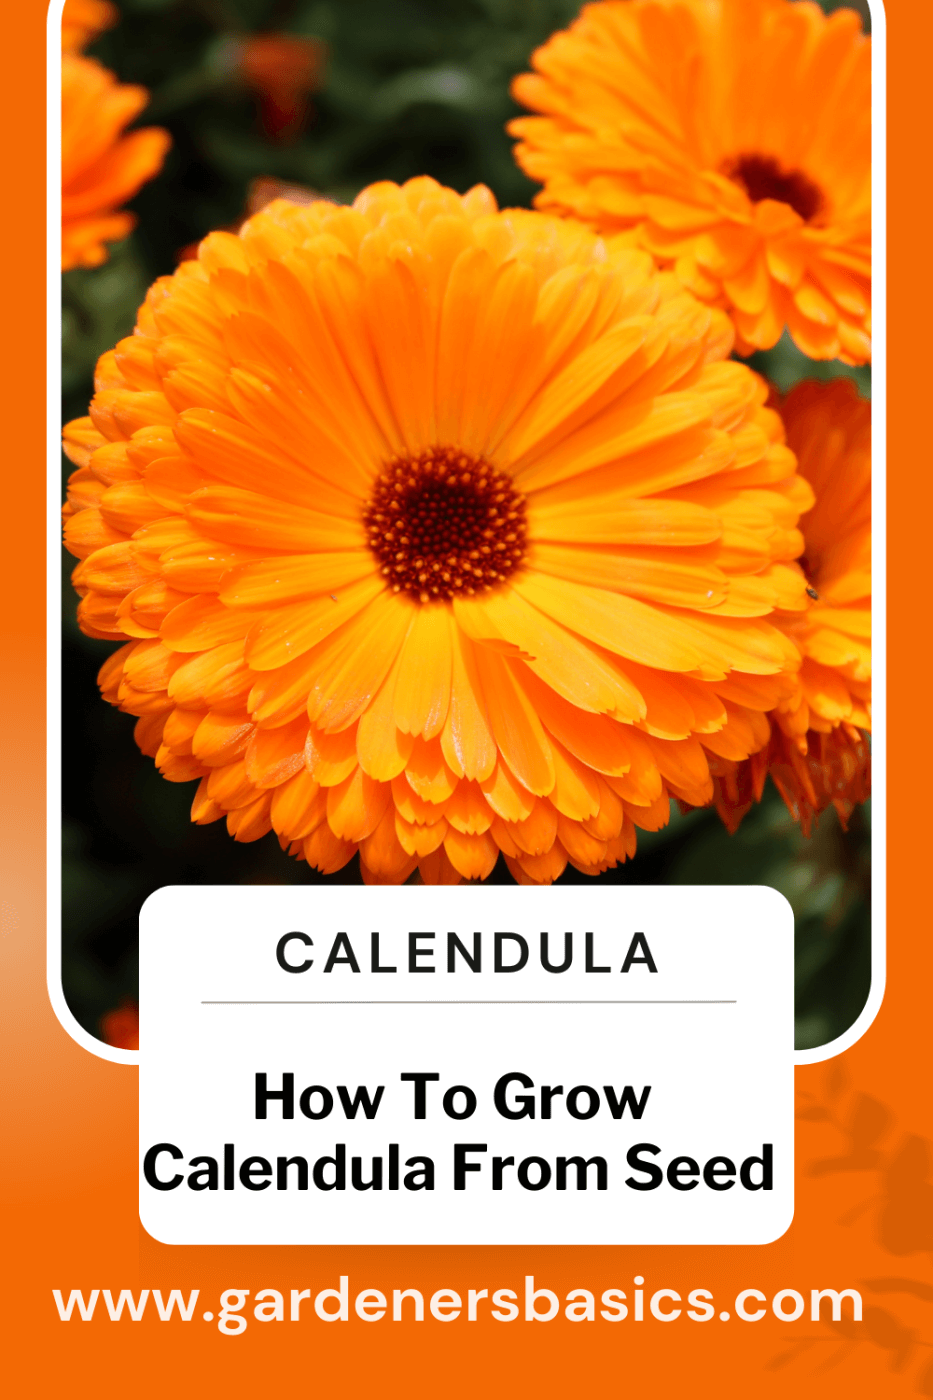 How to grow calendula from seed